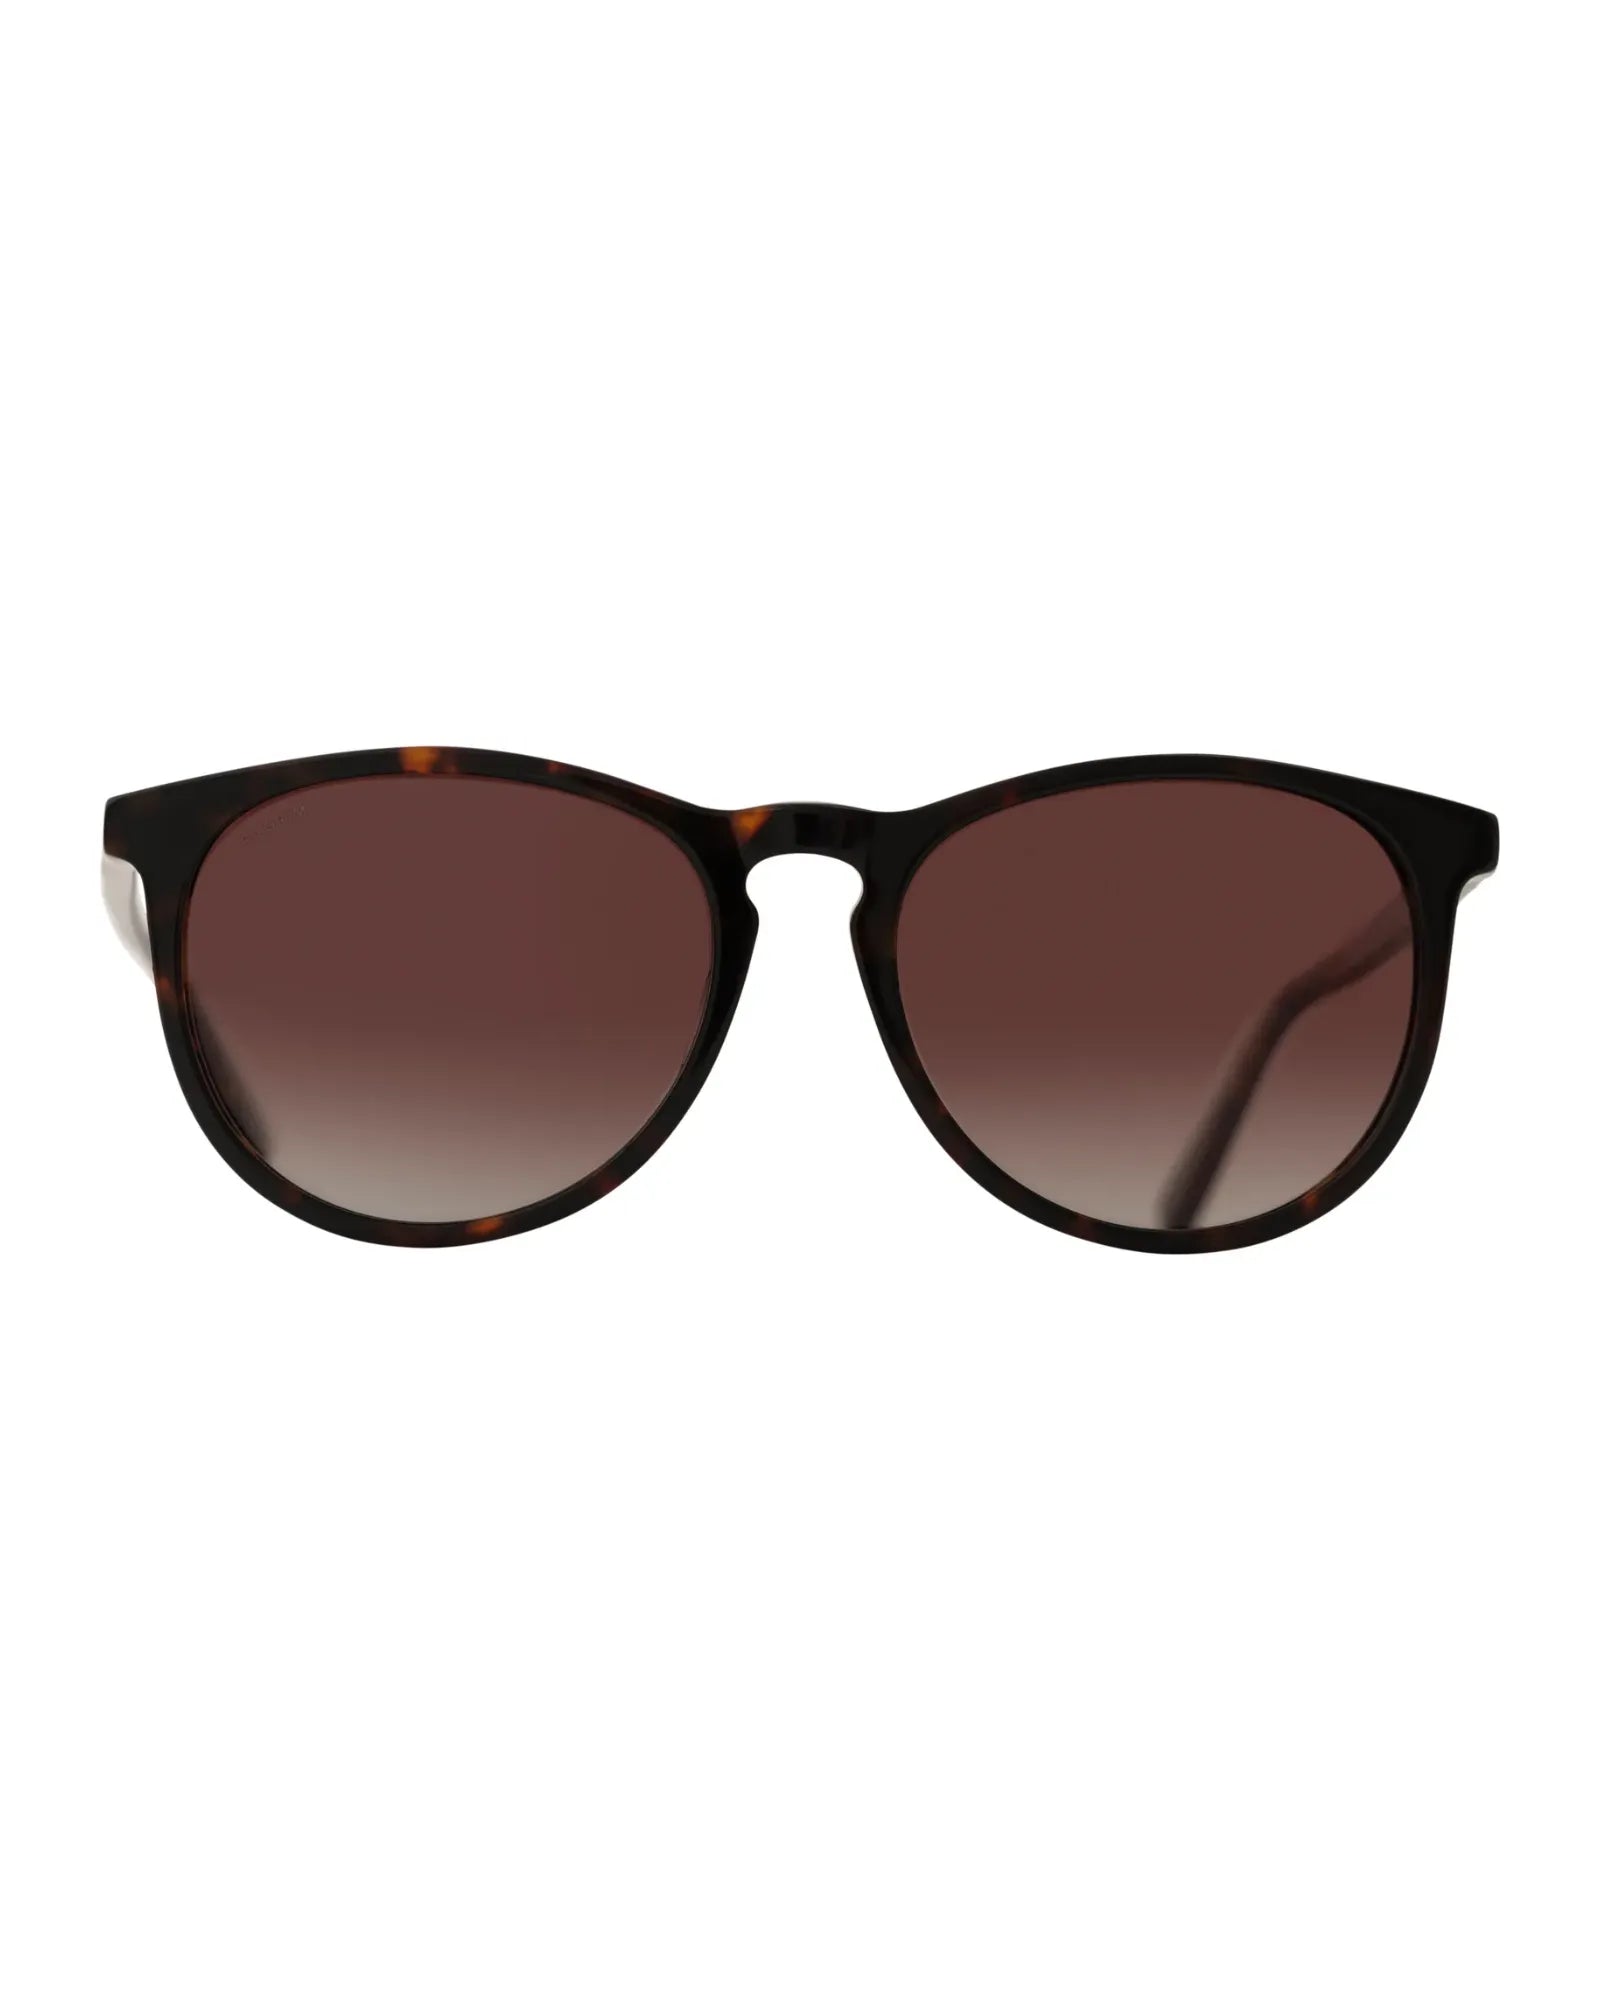 SAHARA Recycled Sunglasses - Tortoise Brown